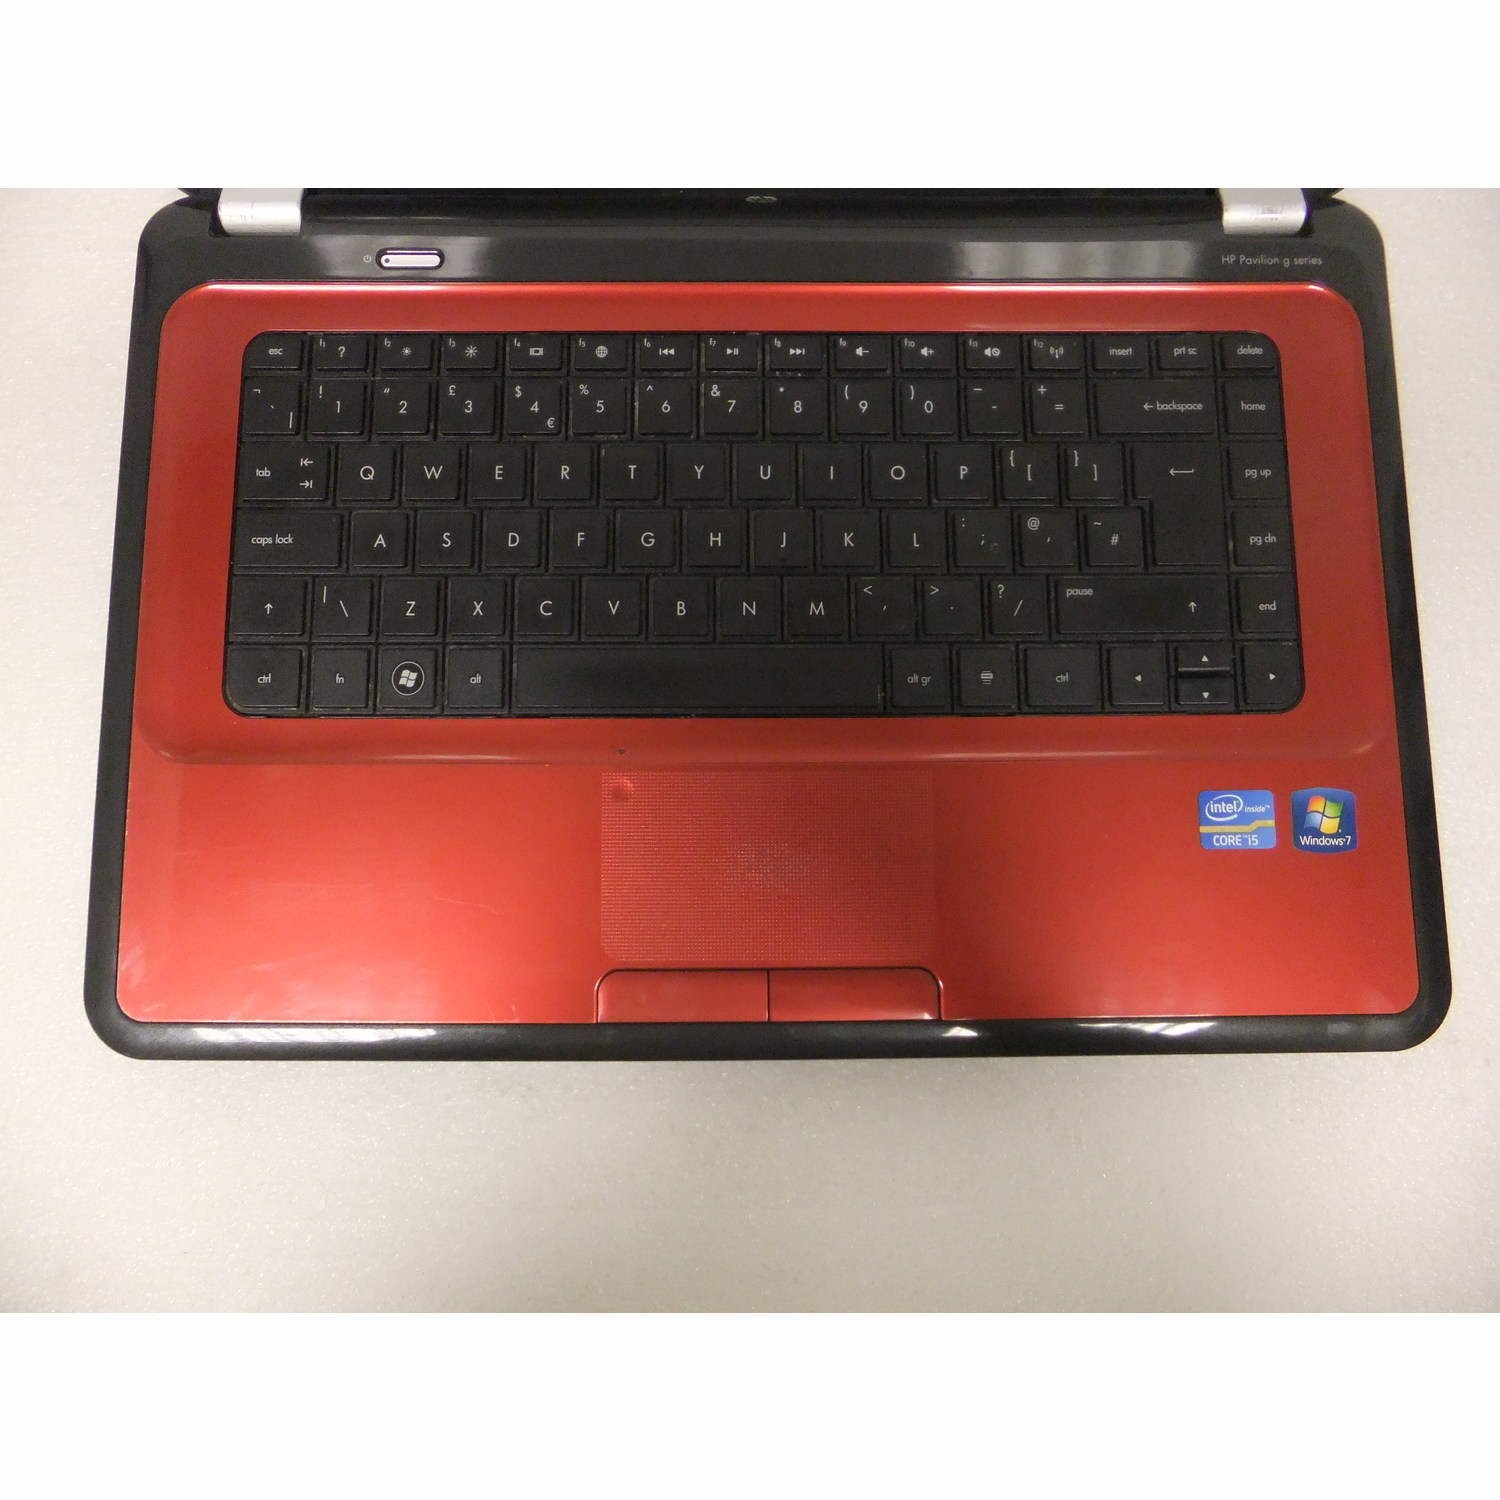 Pre-Owned Grade T3 HP Pavilion g6 Red/Black Intel Core i5 2430M GHz 6GB 750  GB 15.6in Windows 7 Home Premium 64-Bit DVD-RW Laptop 30days